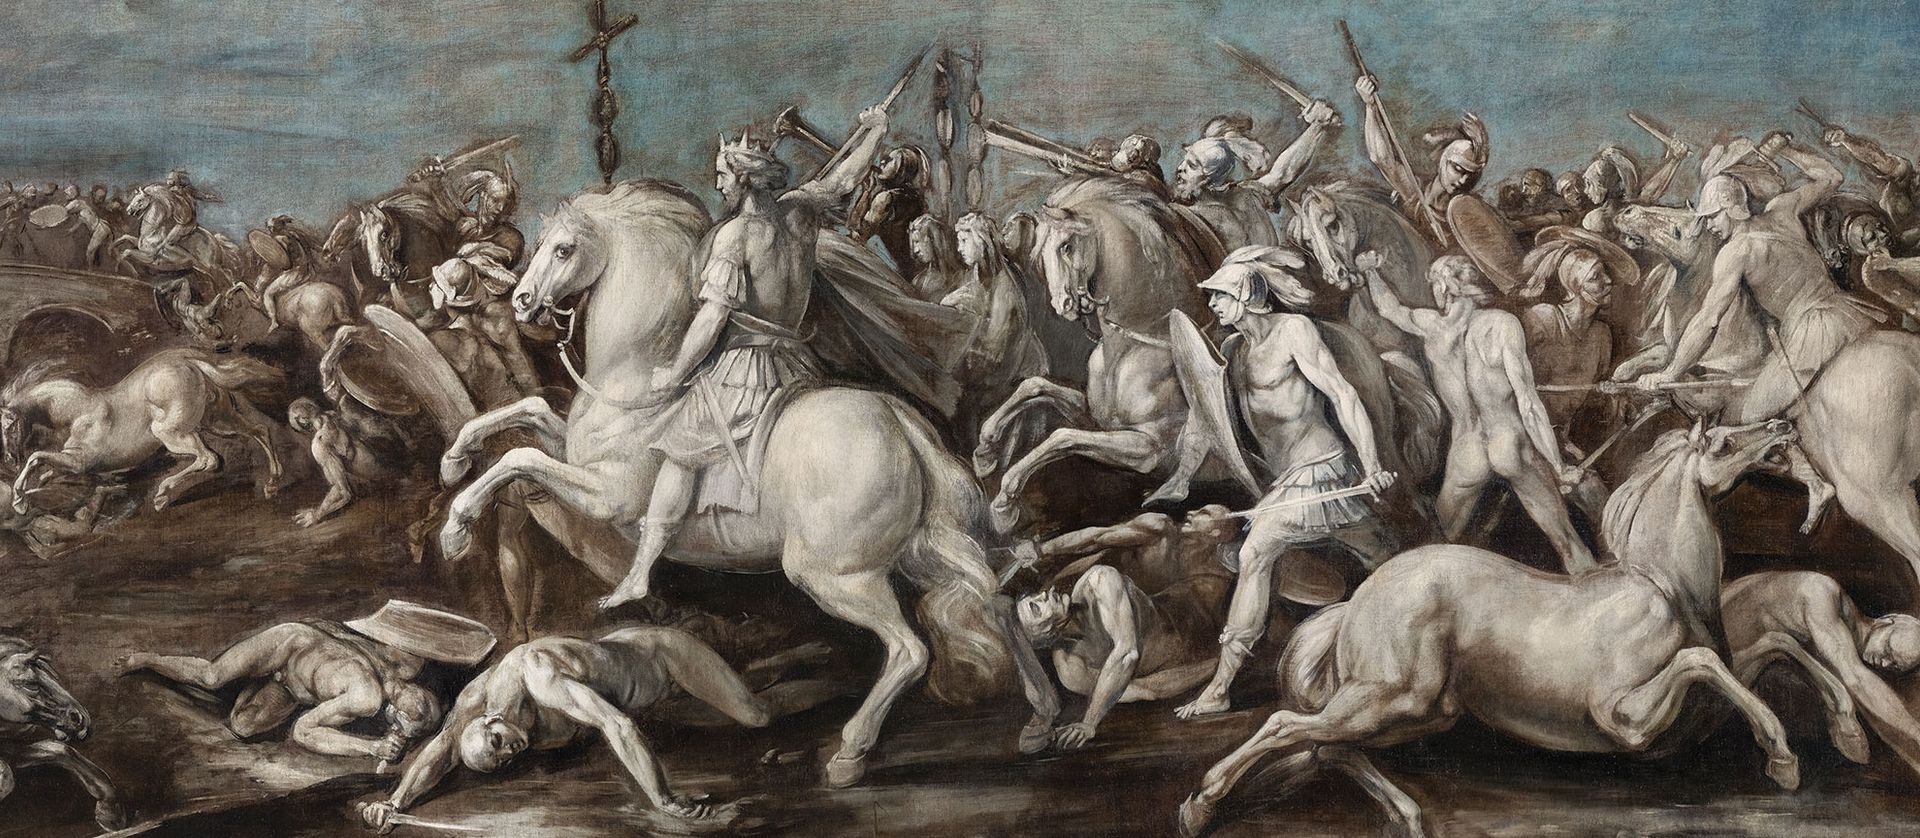 Victory of Constantine - Giuseppe Cesari or “Il Cavaliere d’Arpino” (around 1635-40) 